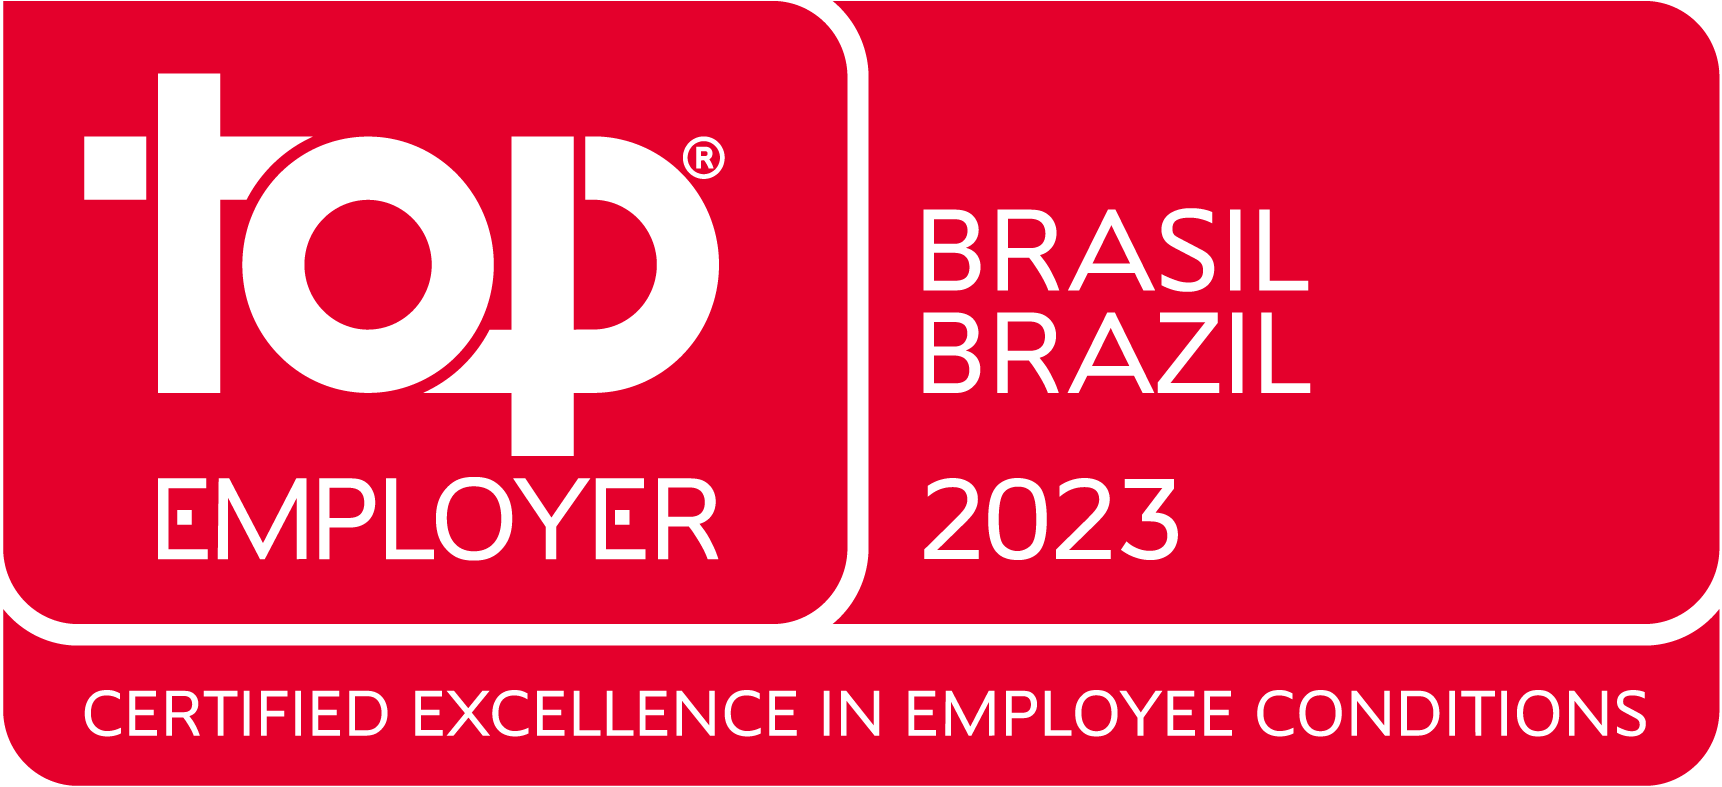 Top employer global 2023